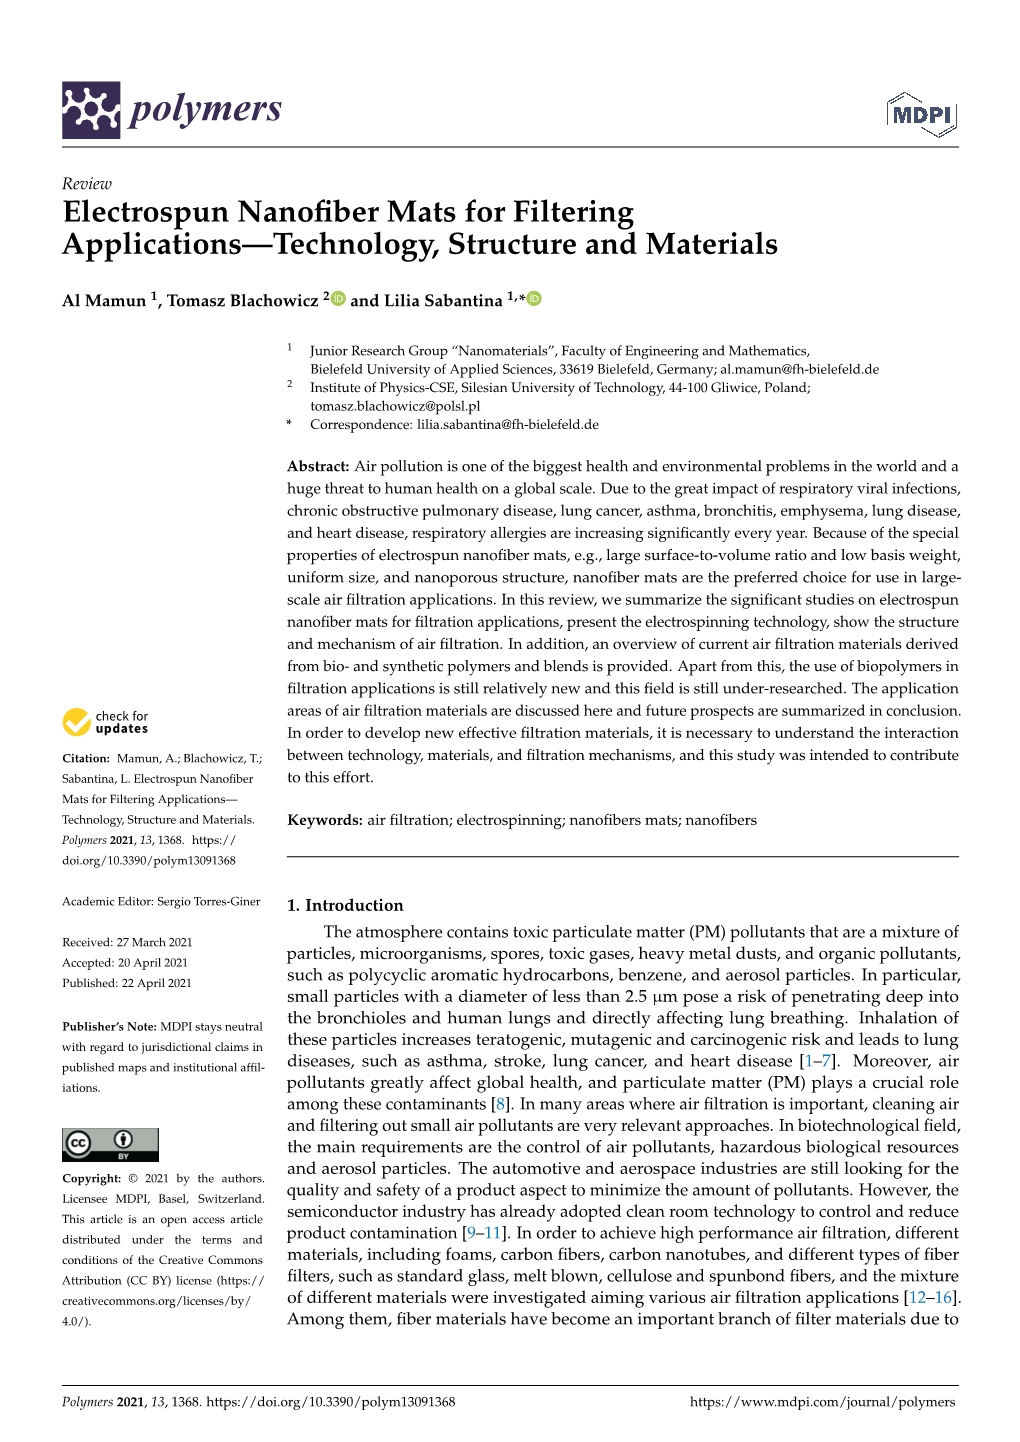 Electrospun Nanofiber Mats for Filtering Applications—Technology